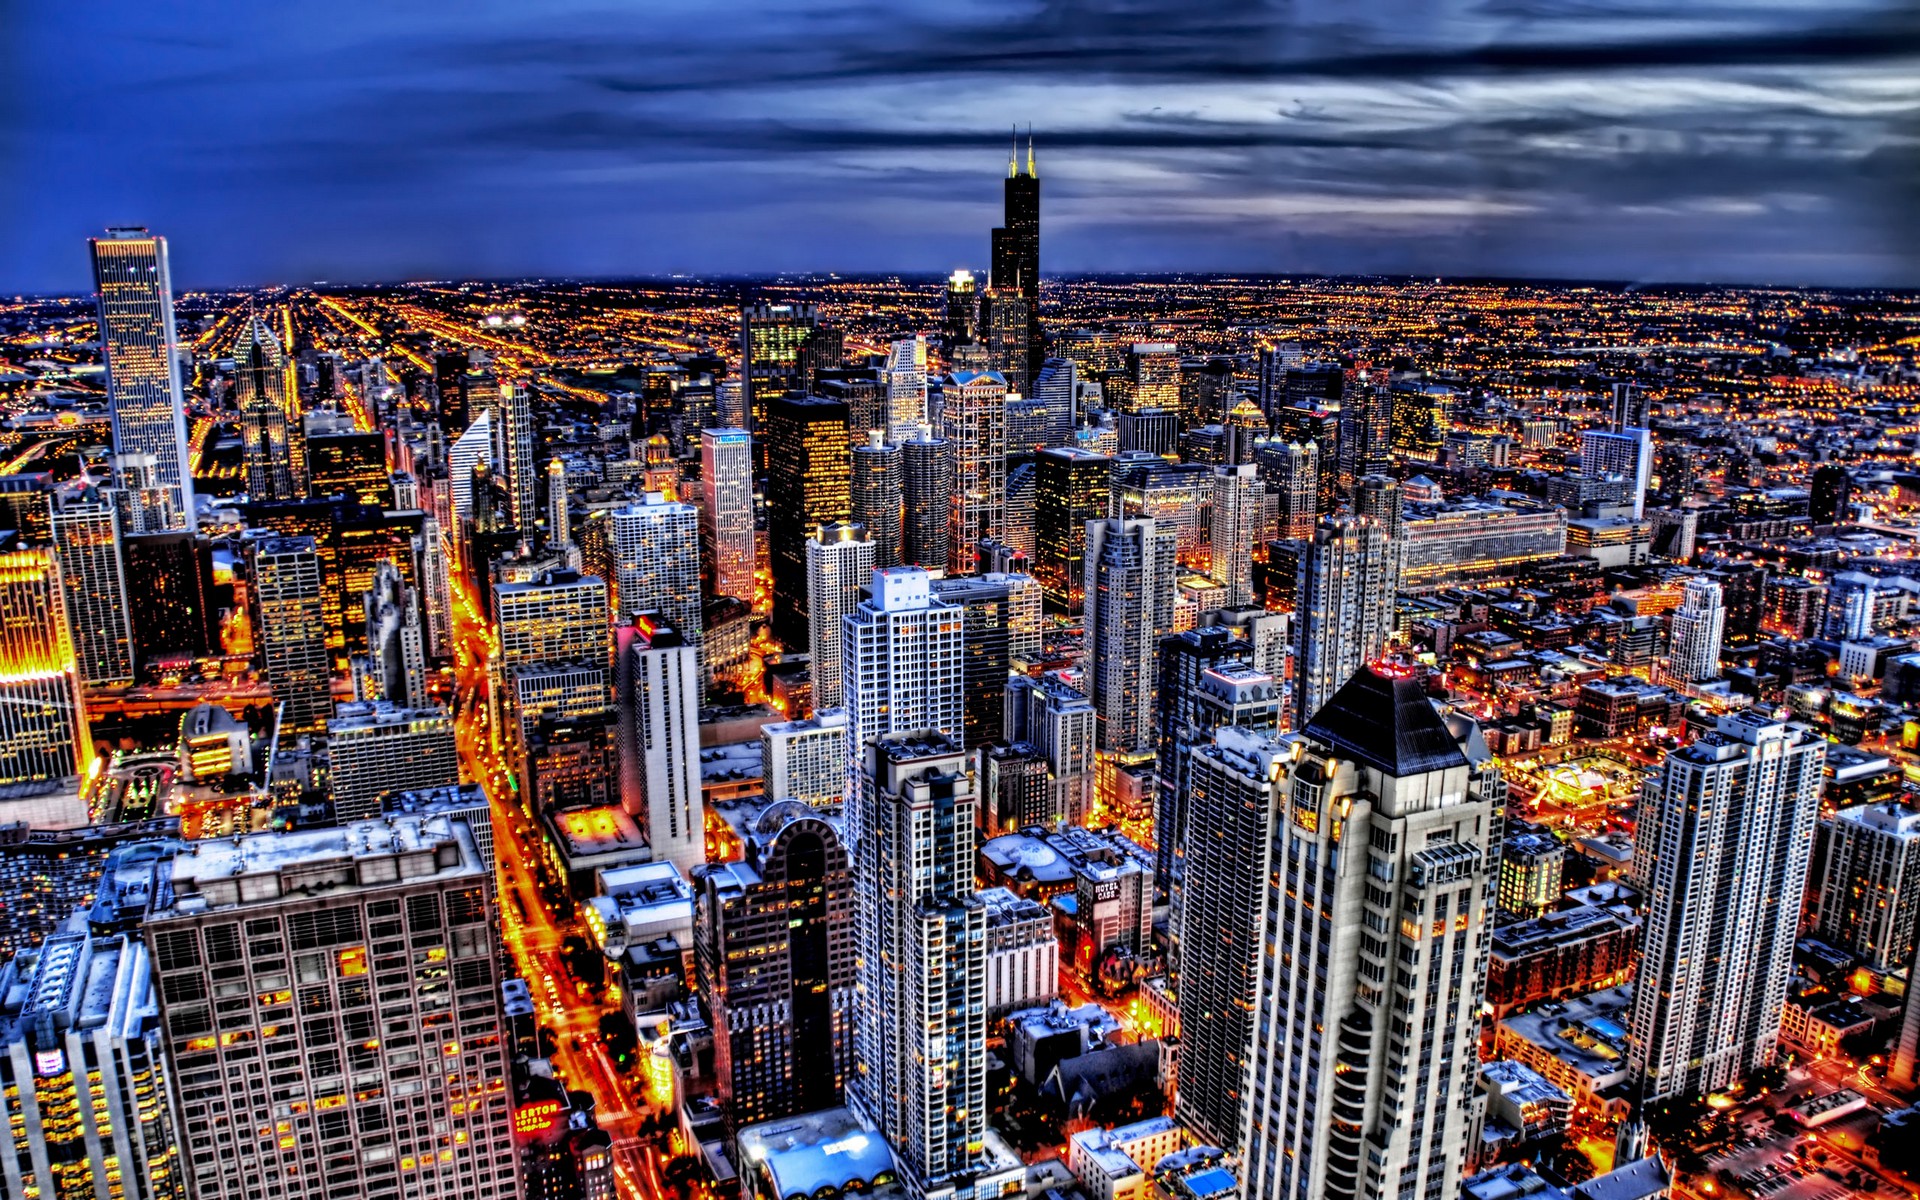 City HD Wallpaper Image For Desktop